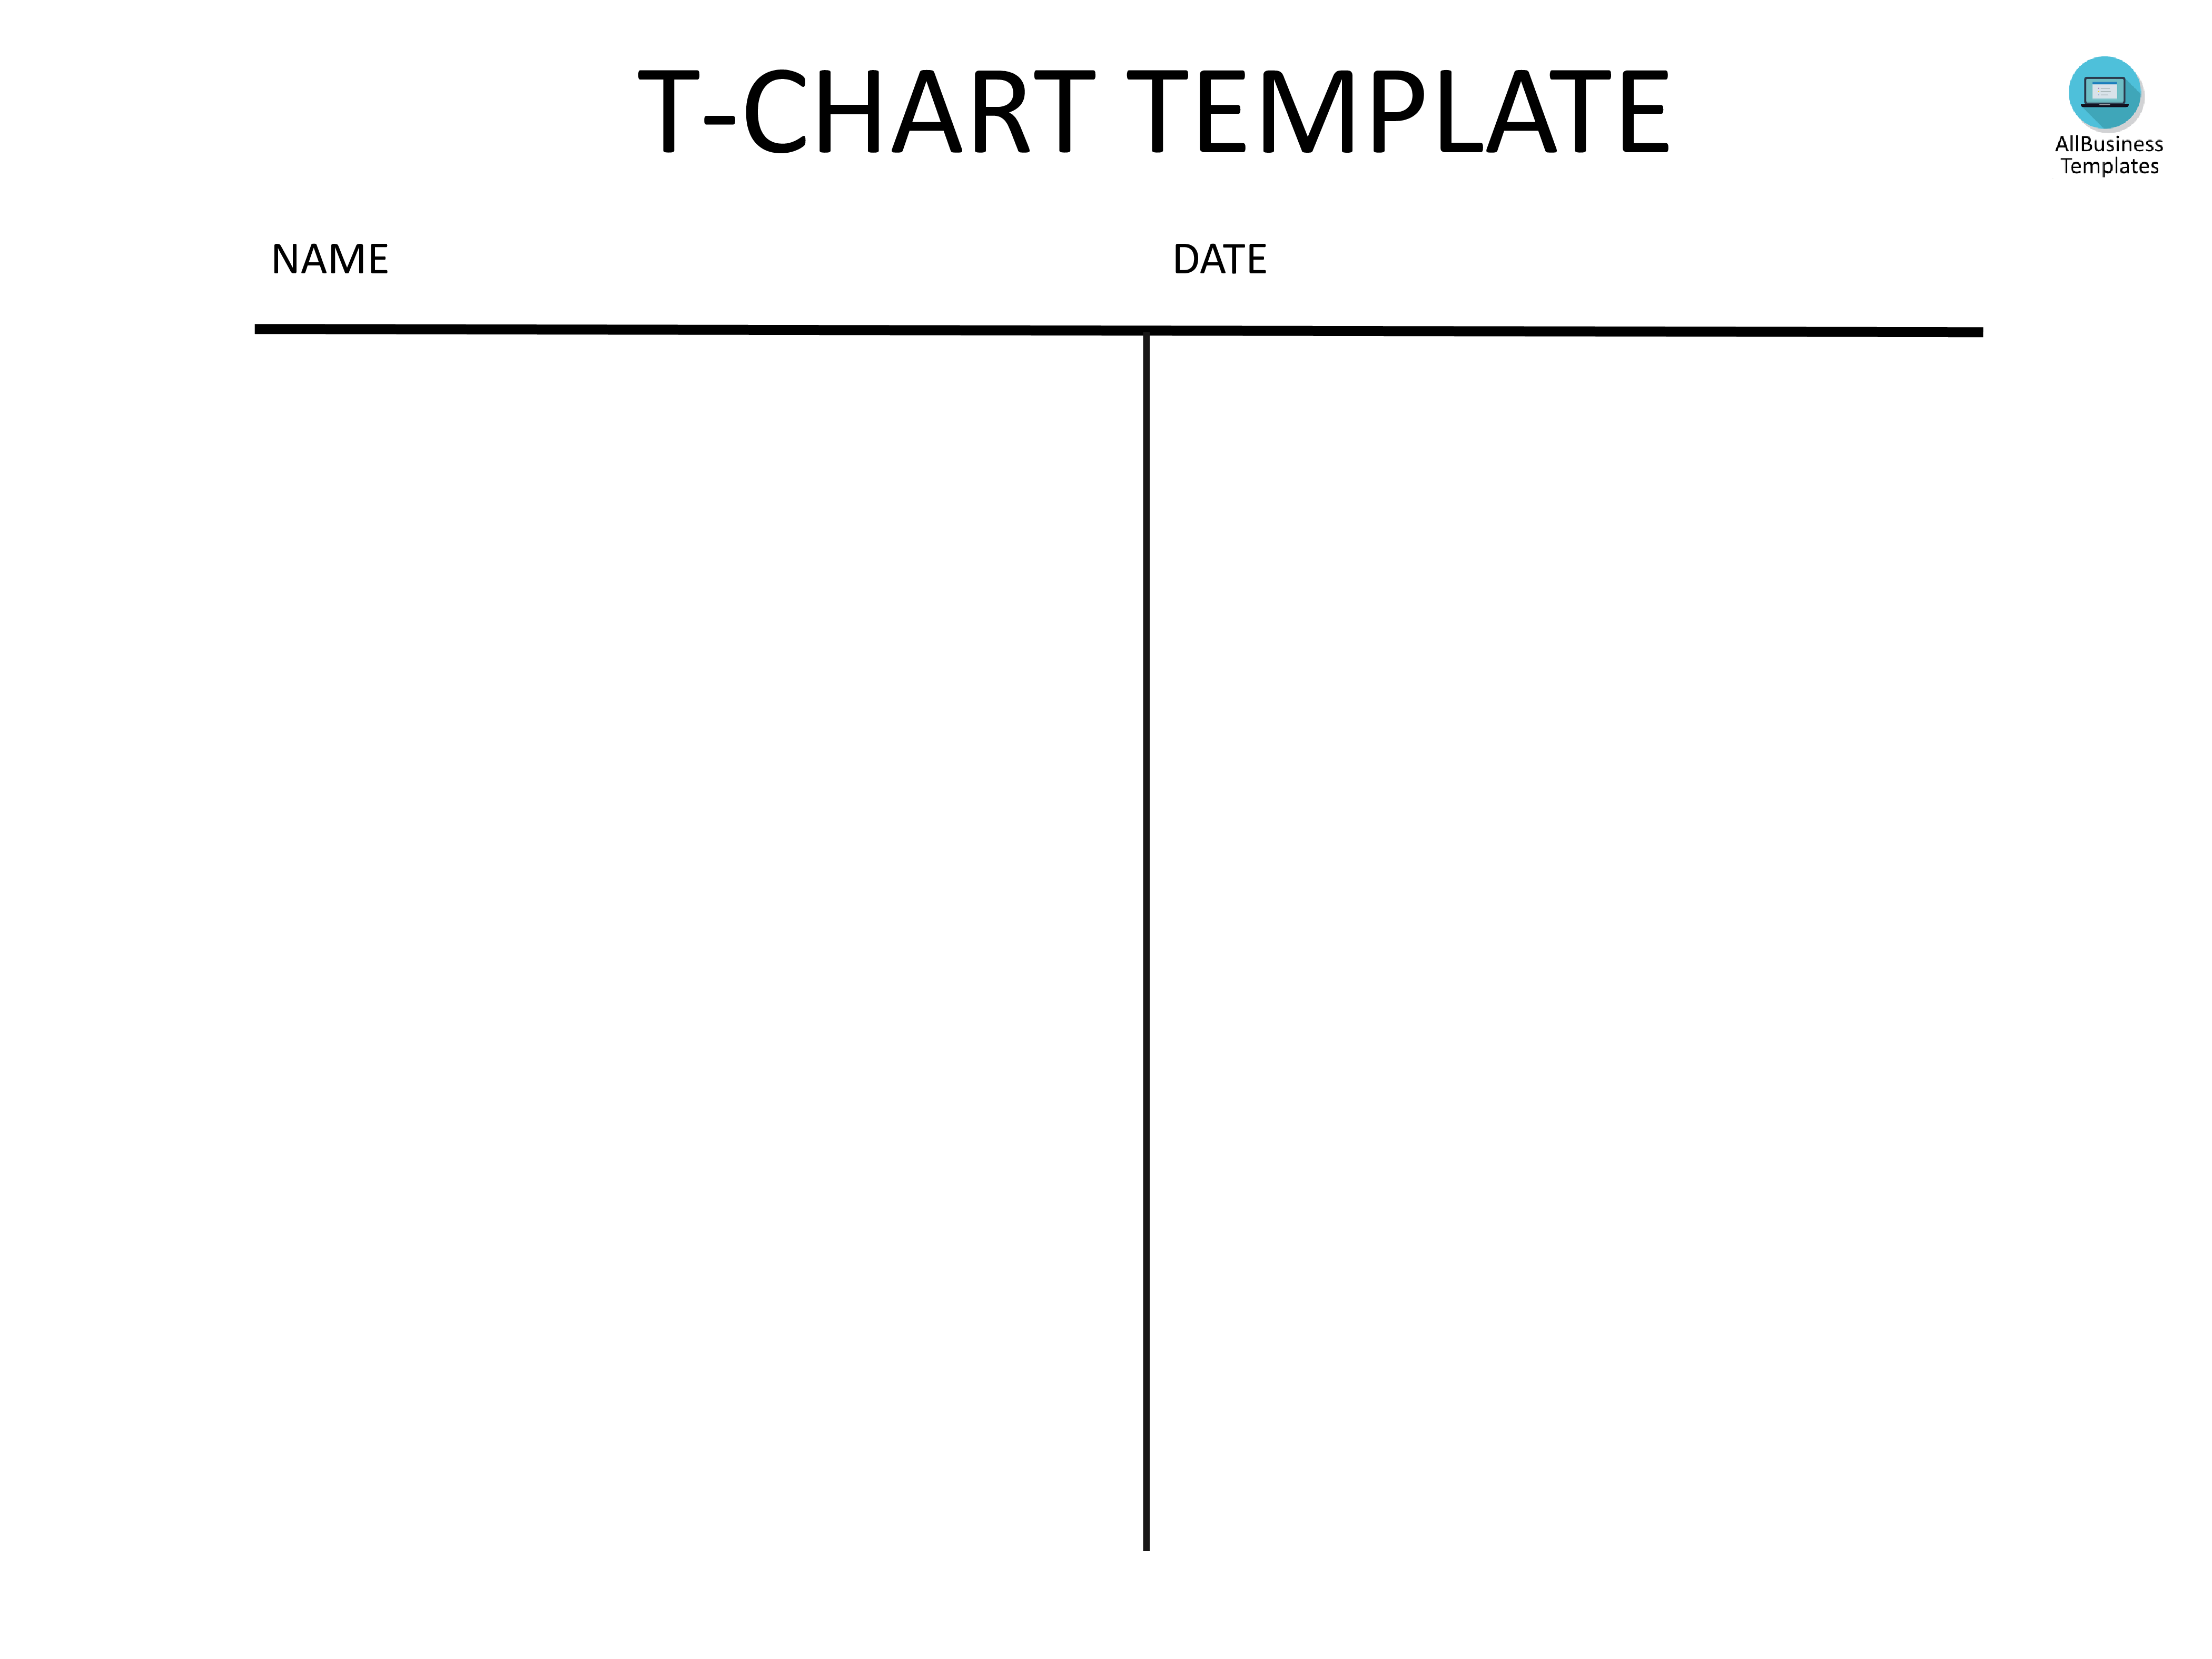 T Chart Image